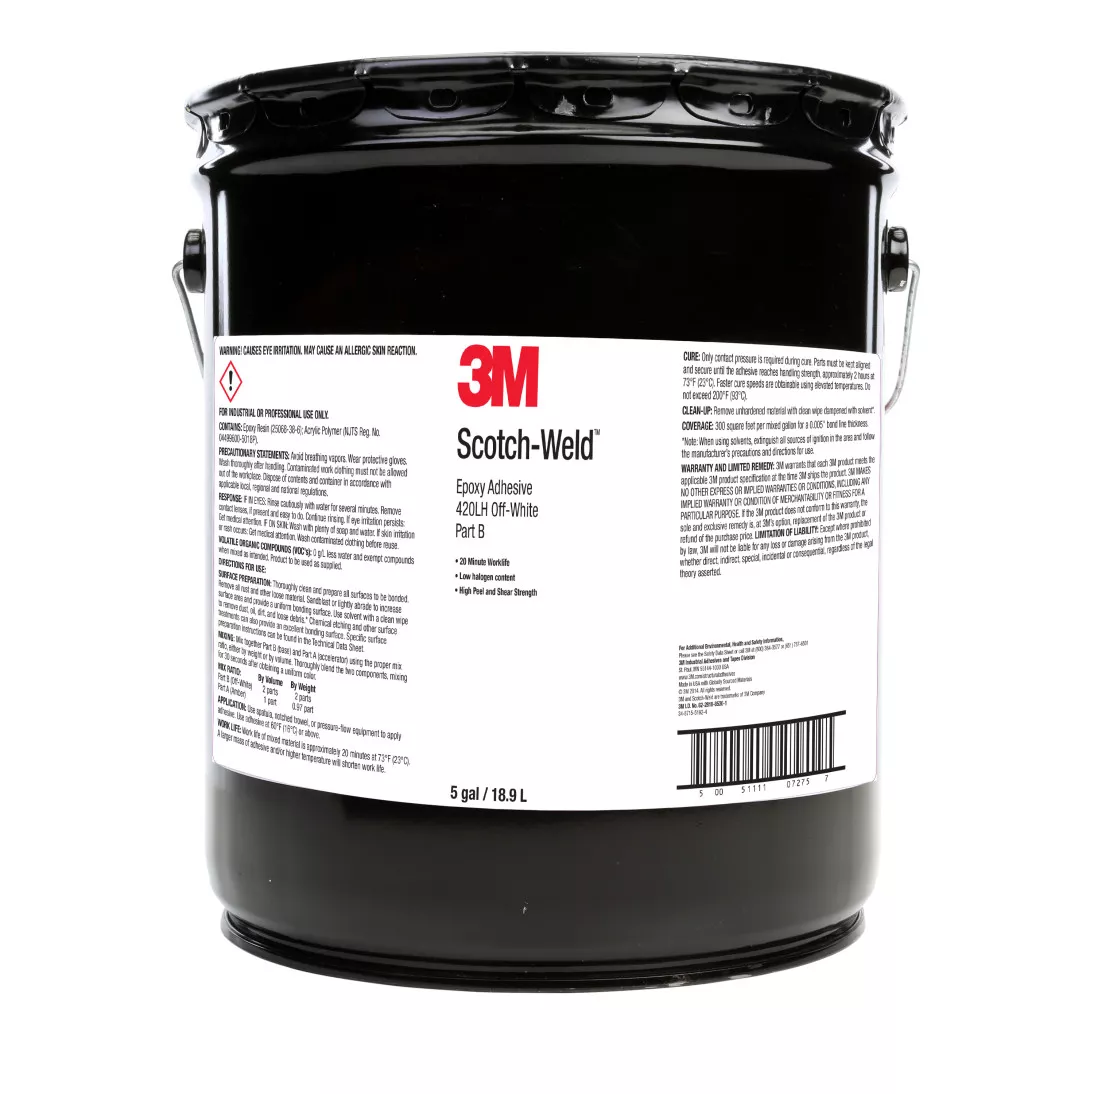 3M™ Scotch-Weld™ Epoxy Adhesive 420LH, Off-White, Part B, 5 Gallon Drum
(Pail)